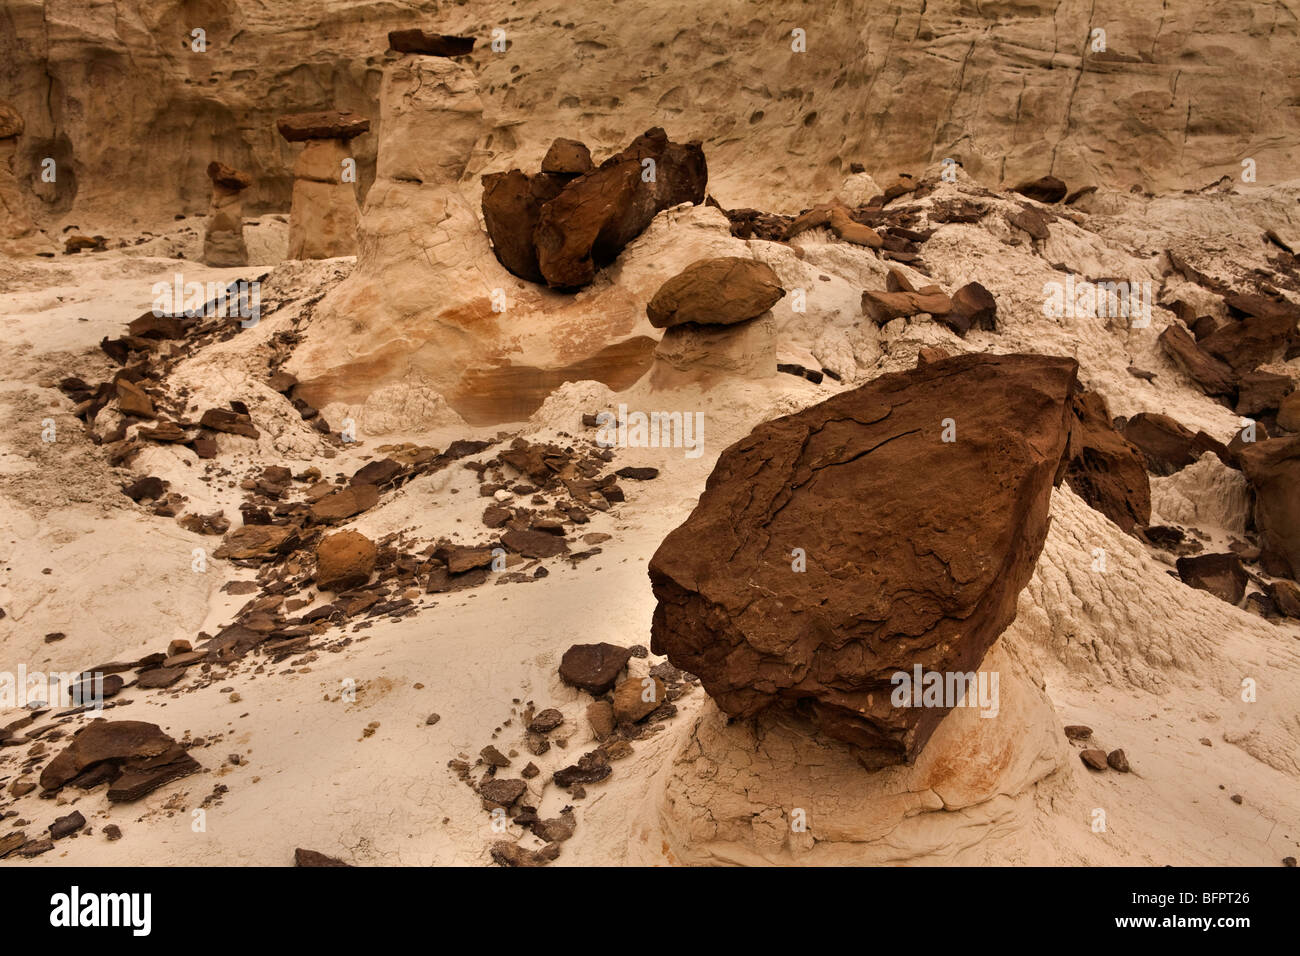 Geological formations of hoodoos in the Rimrock Hoodoo basin on public land in Utah, USA Stock Photo